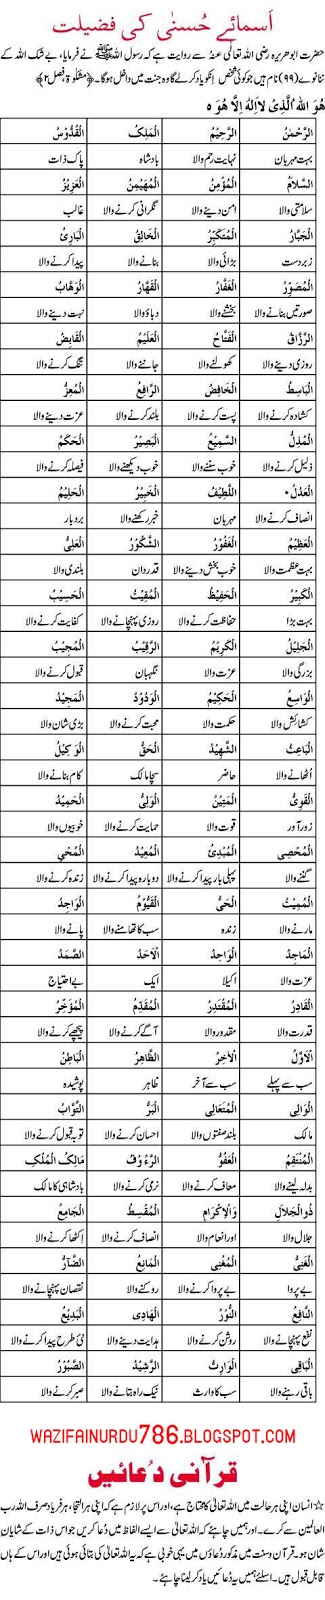 99 name of allah with urdu translation